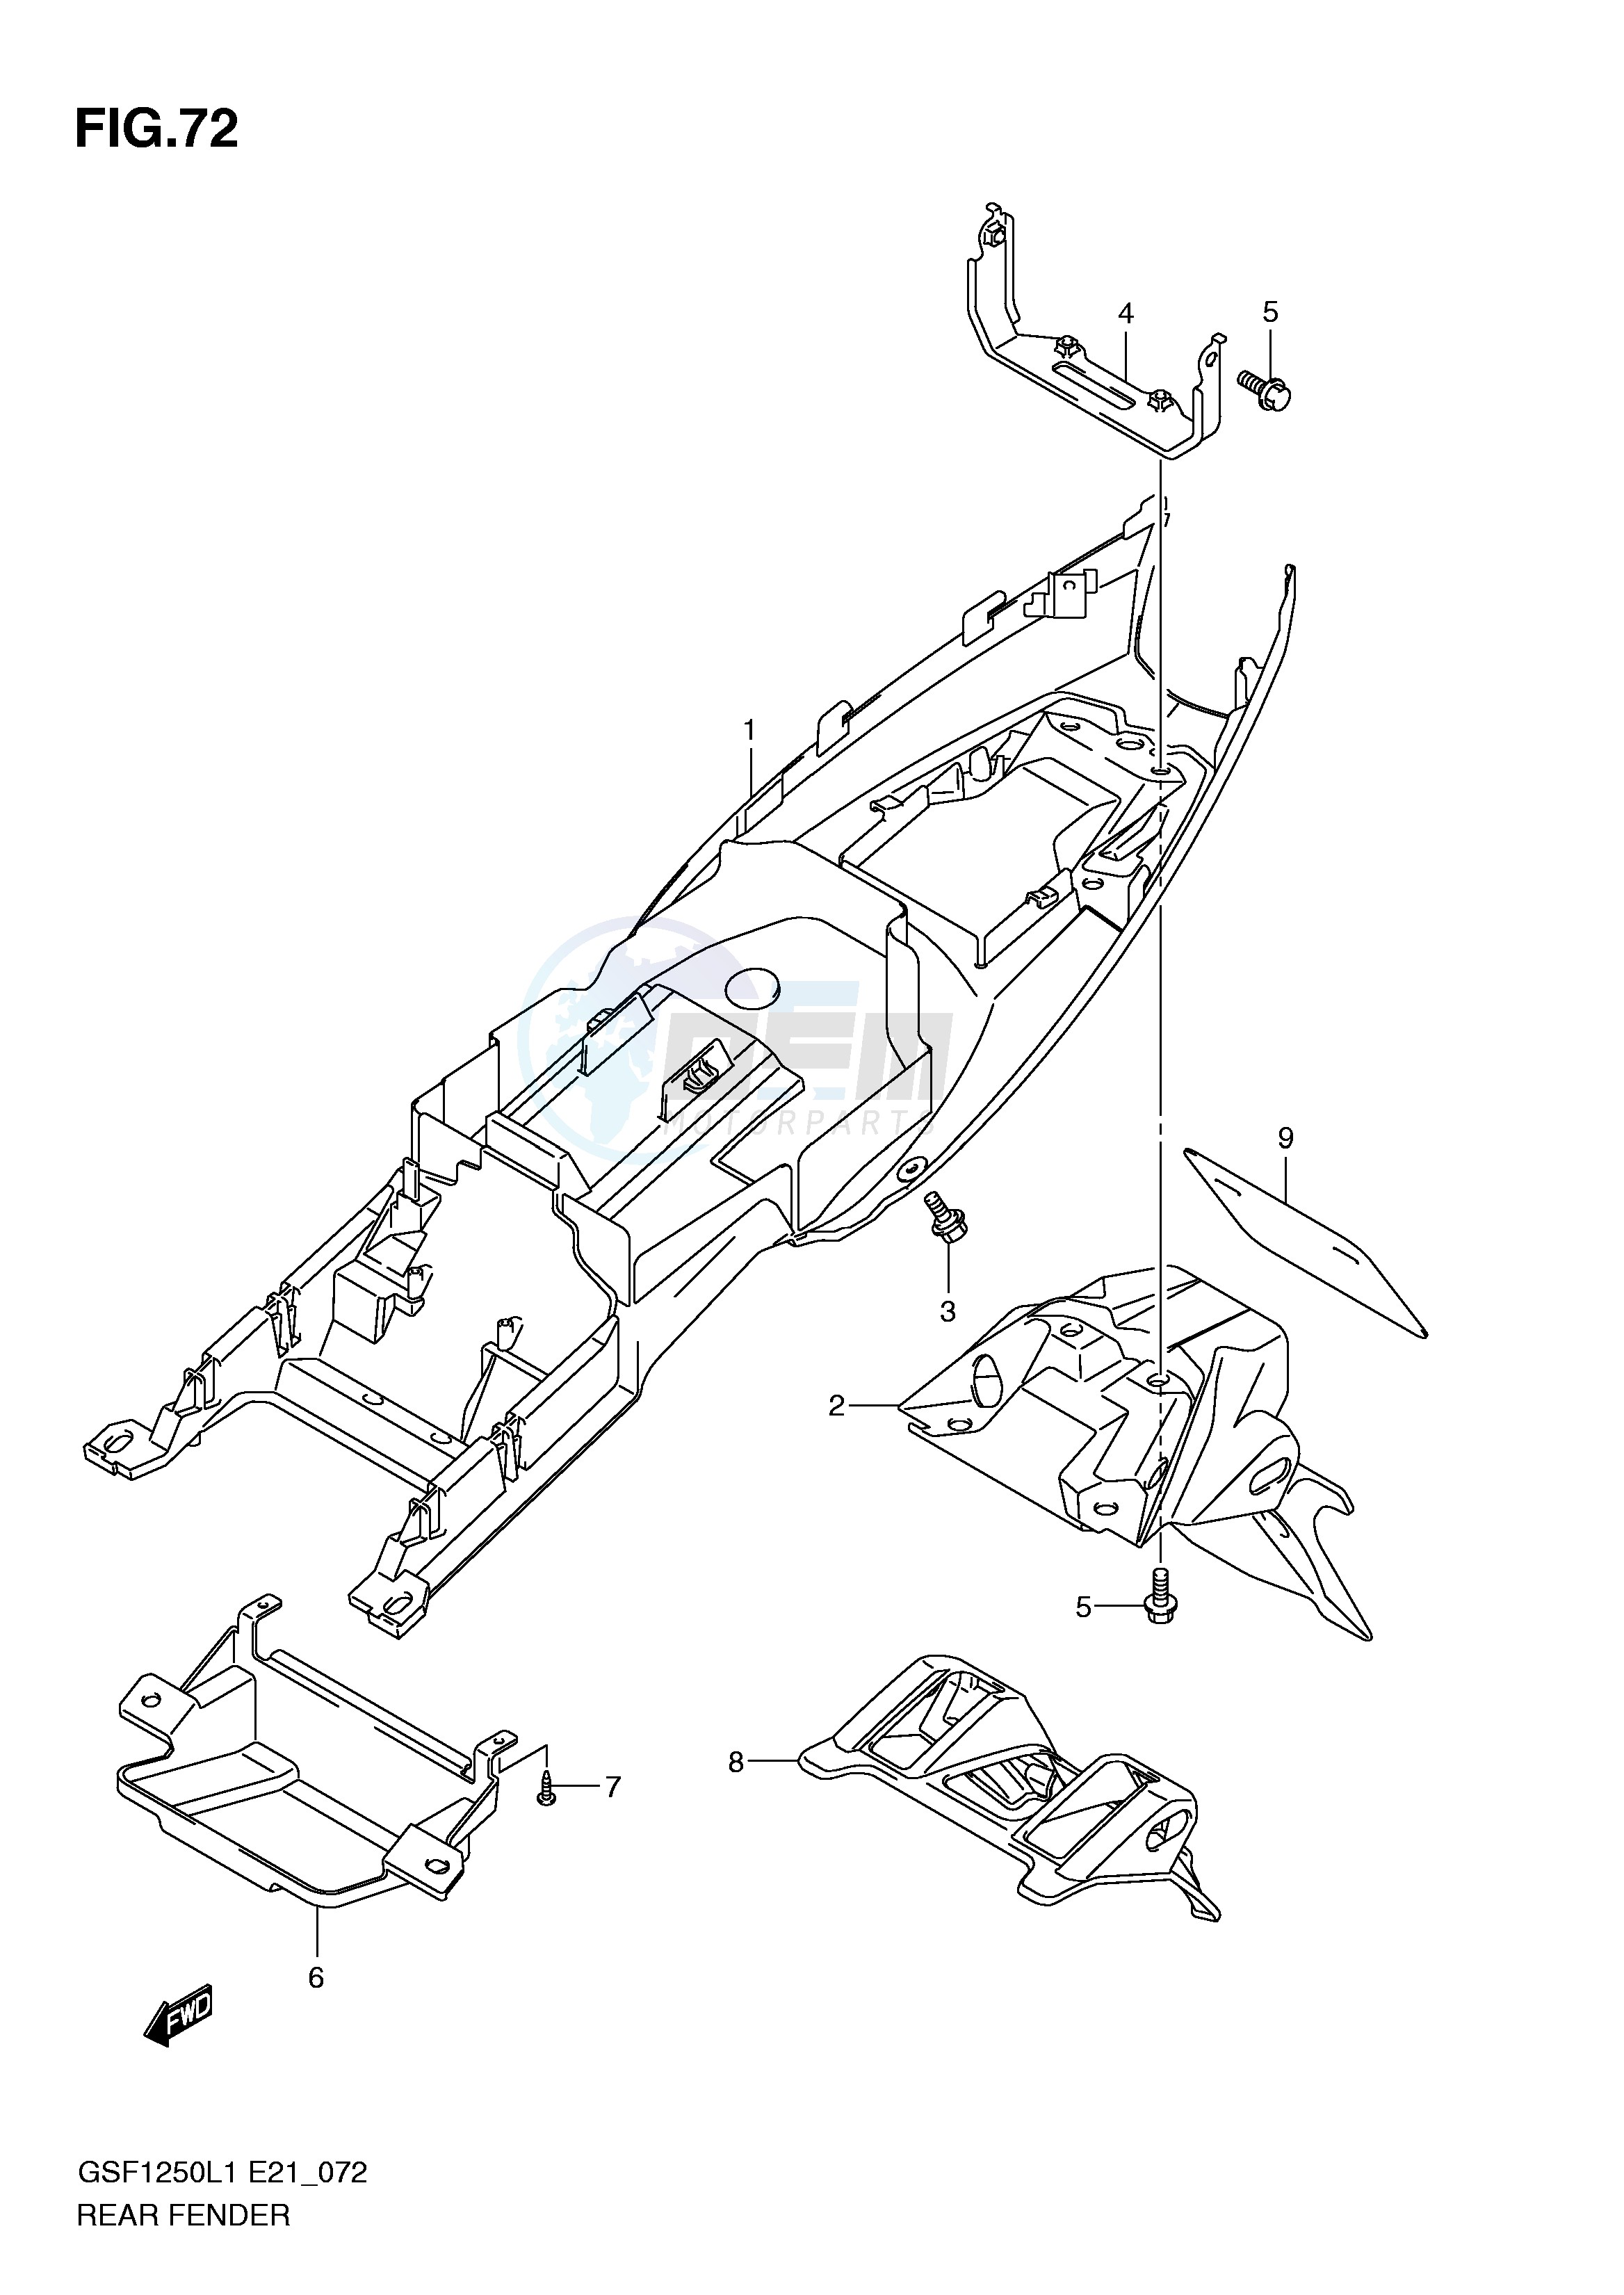 REAR FENDER (GSF1250L1 E24) blueprint